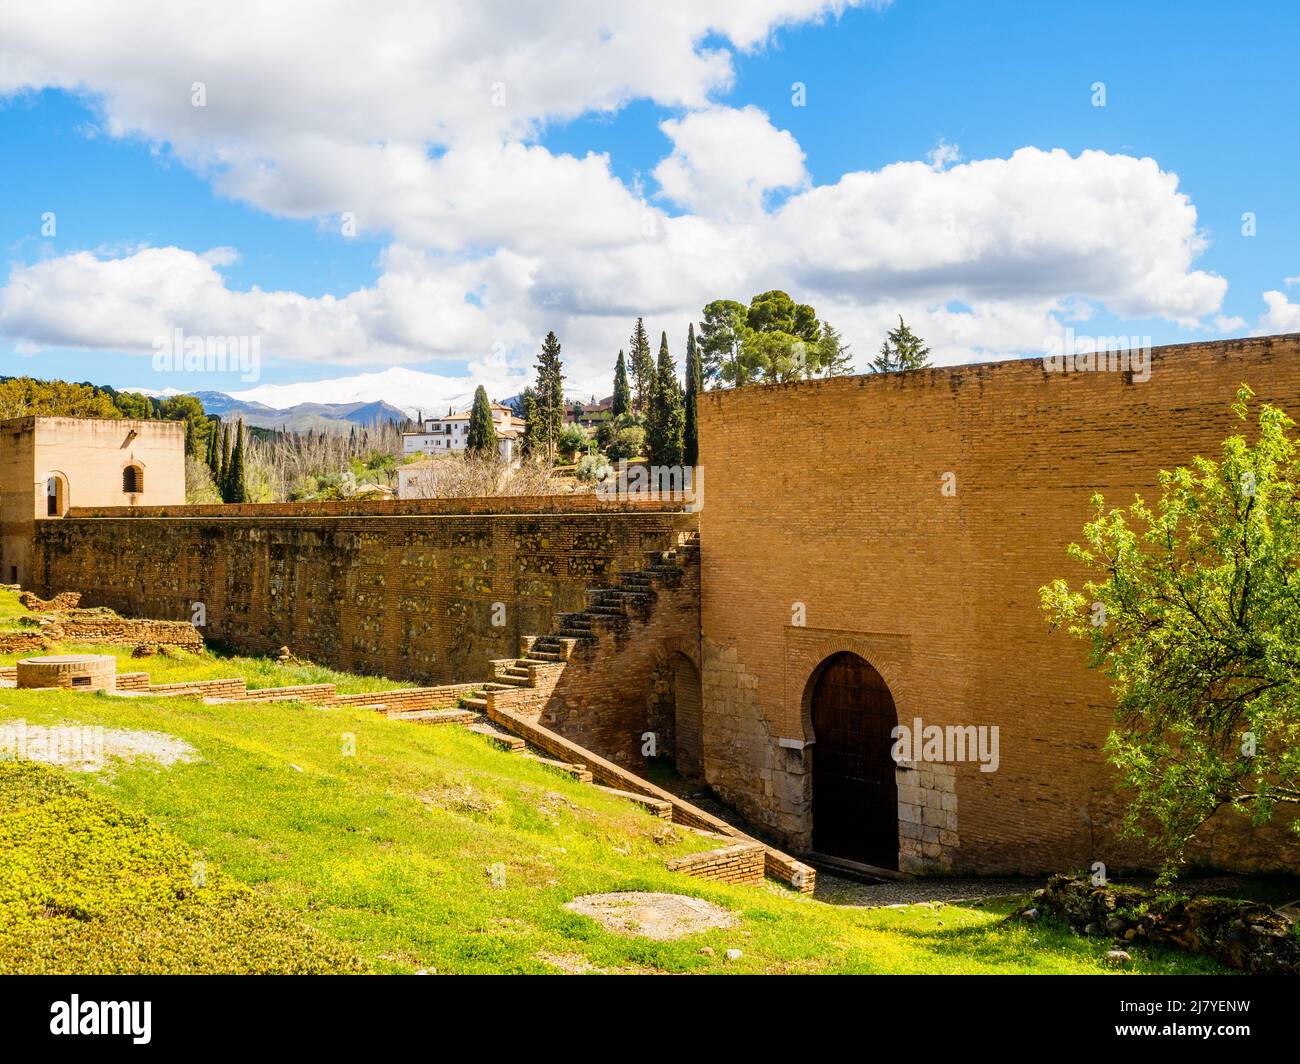 Puerta de los siete suelos (Gate of the seven floors) in the Alhambra  complex - Granada, Spain Stock Photo - Alamy